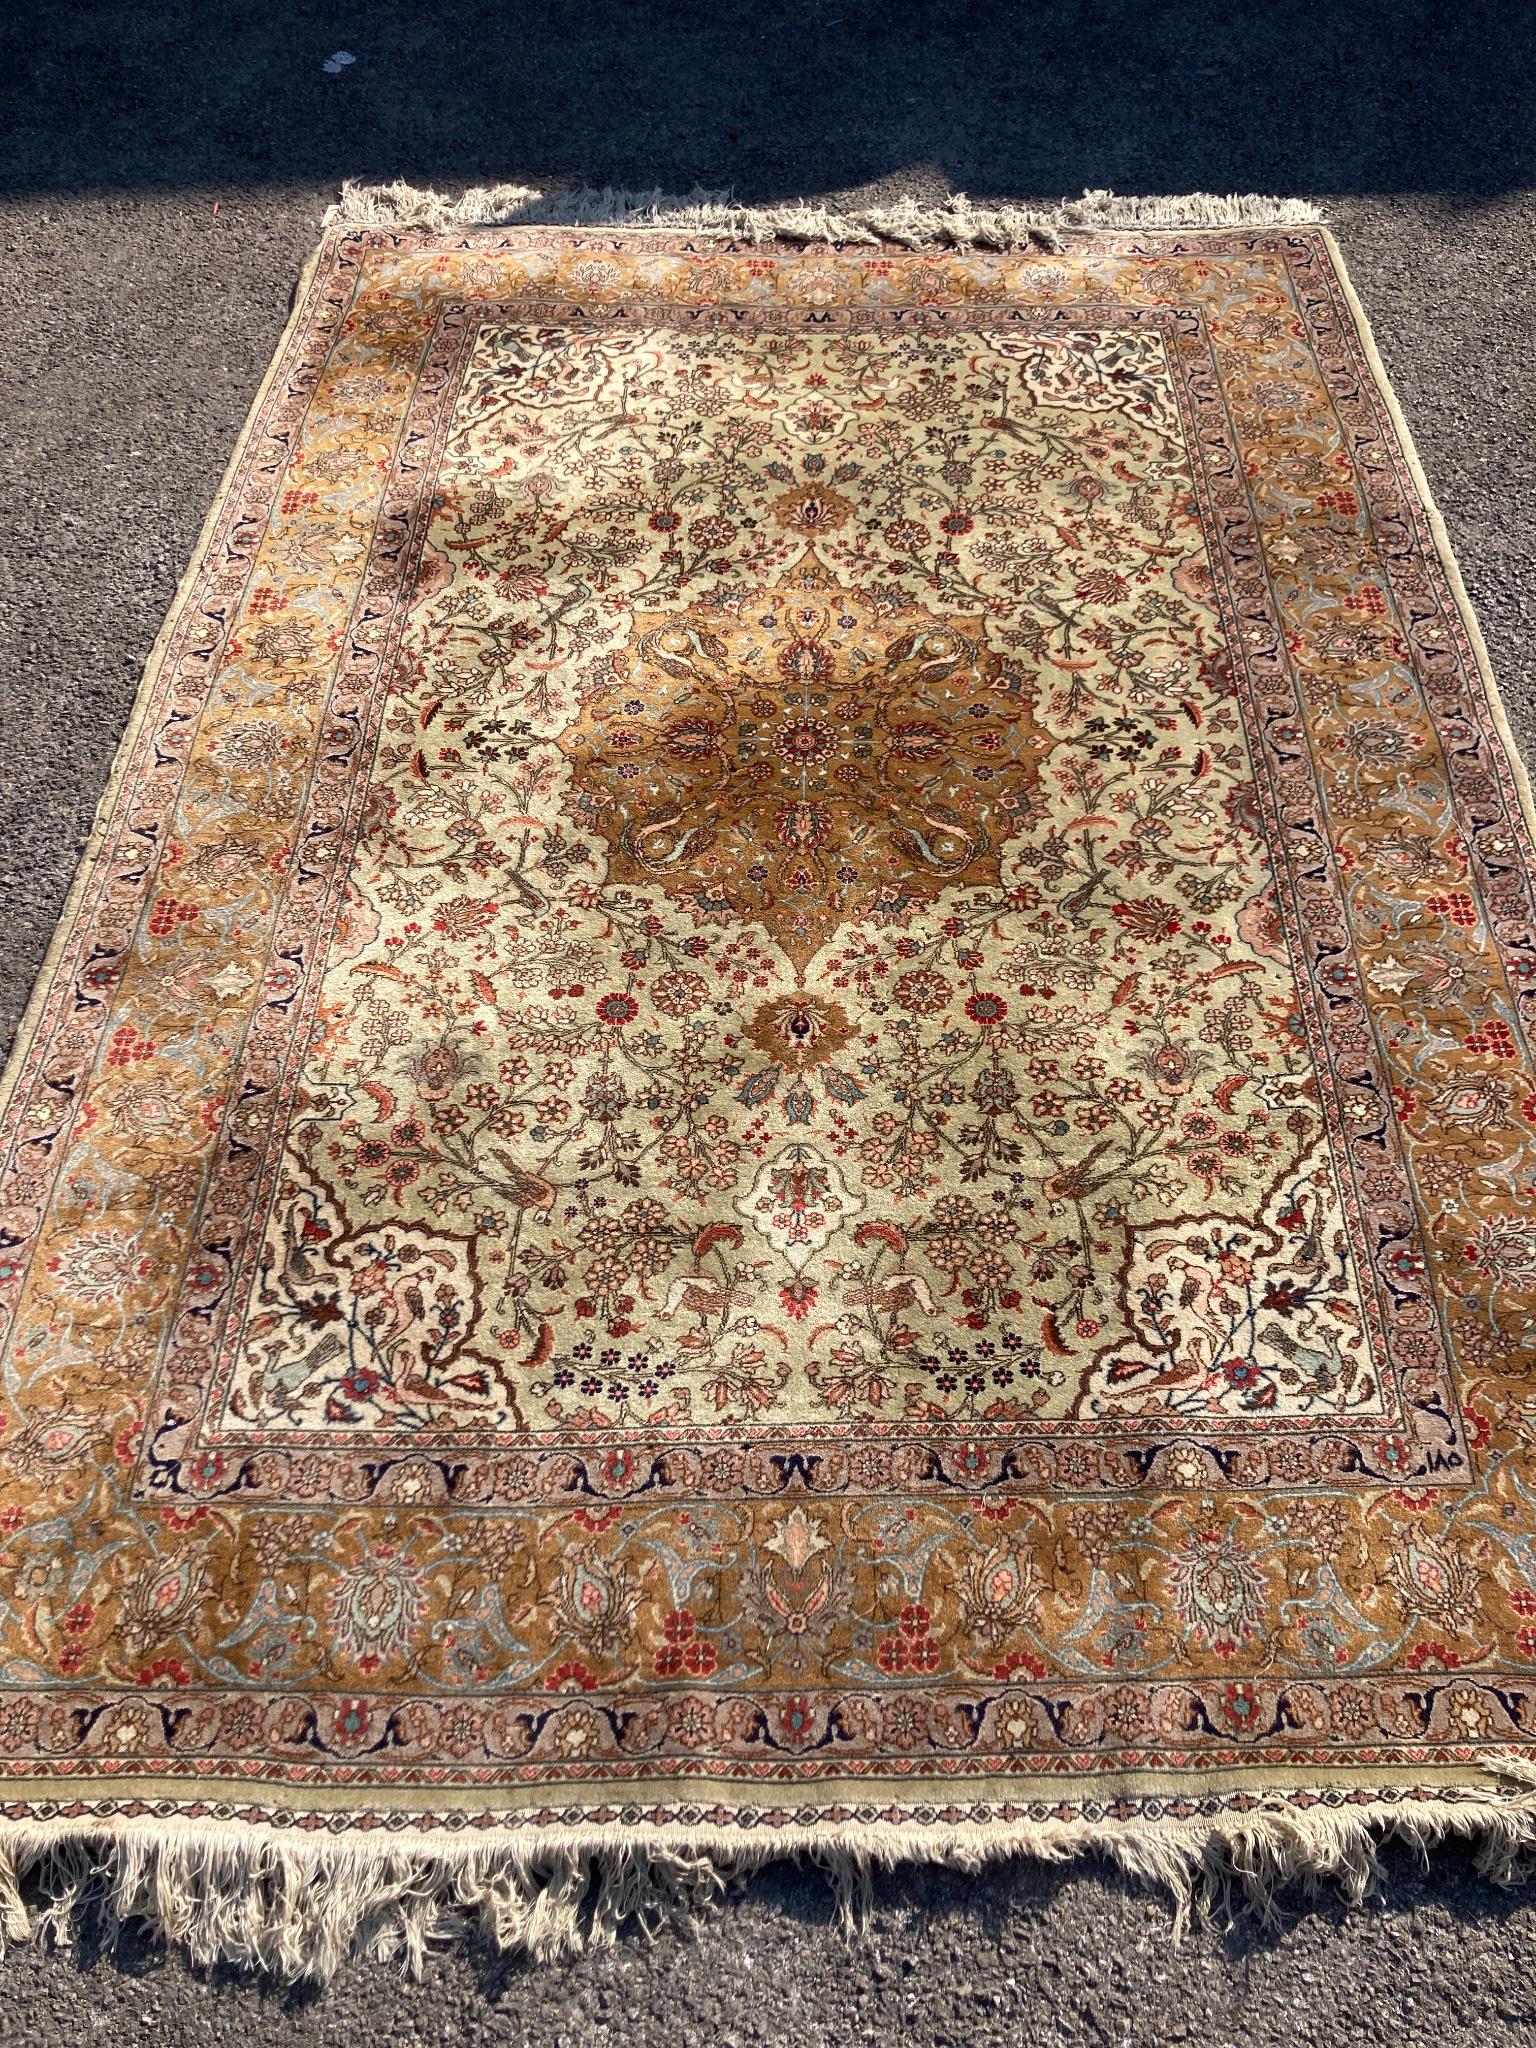 A Kashan ivory ground rug, 256 x 177cm